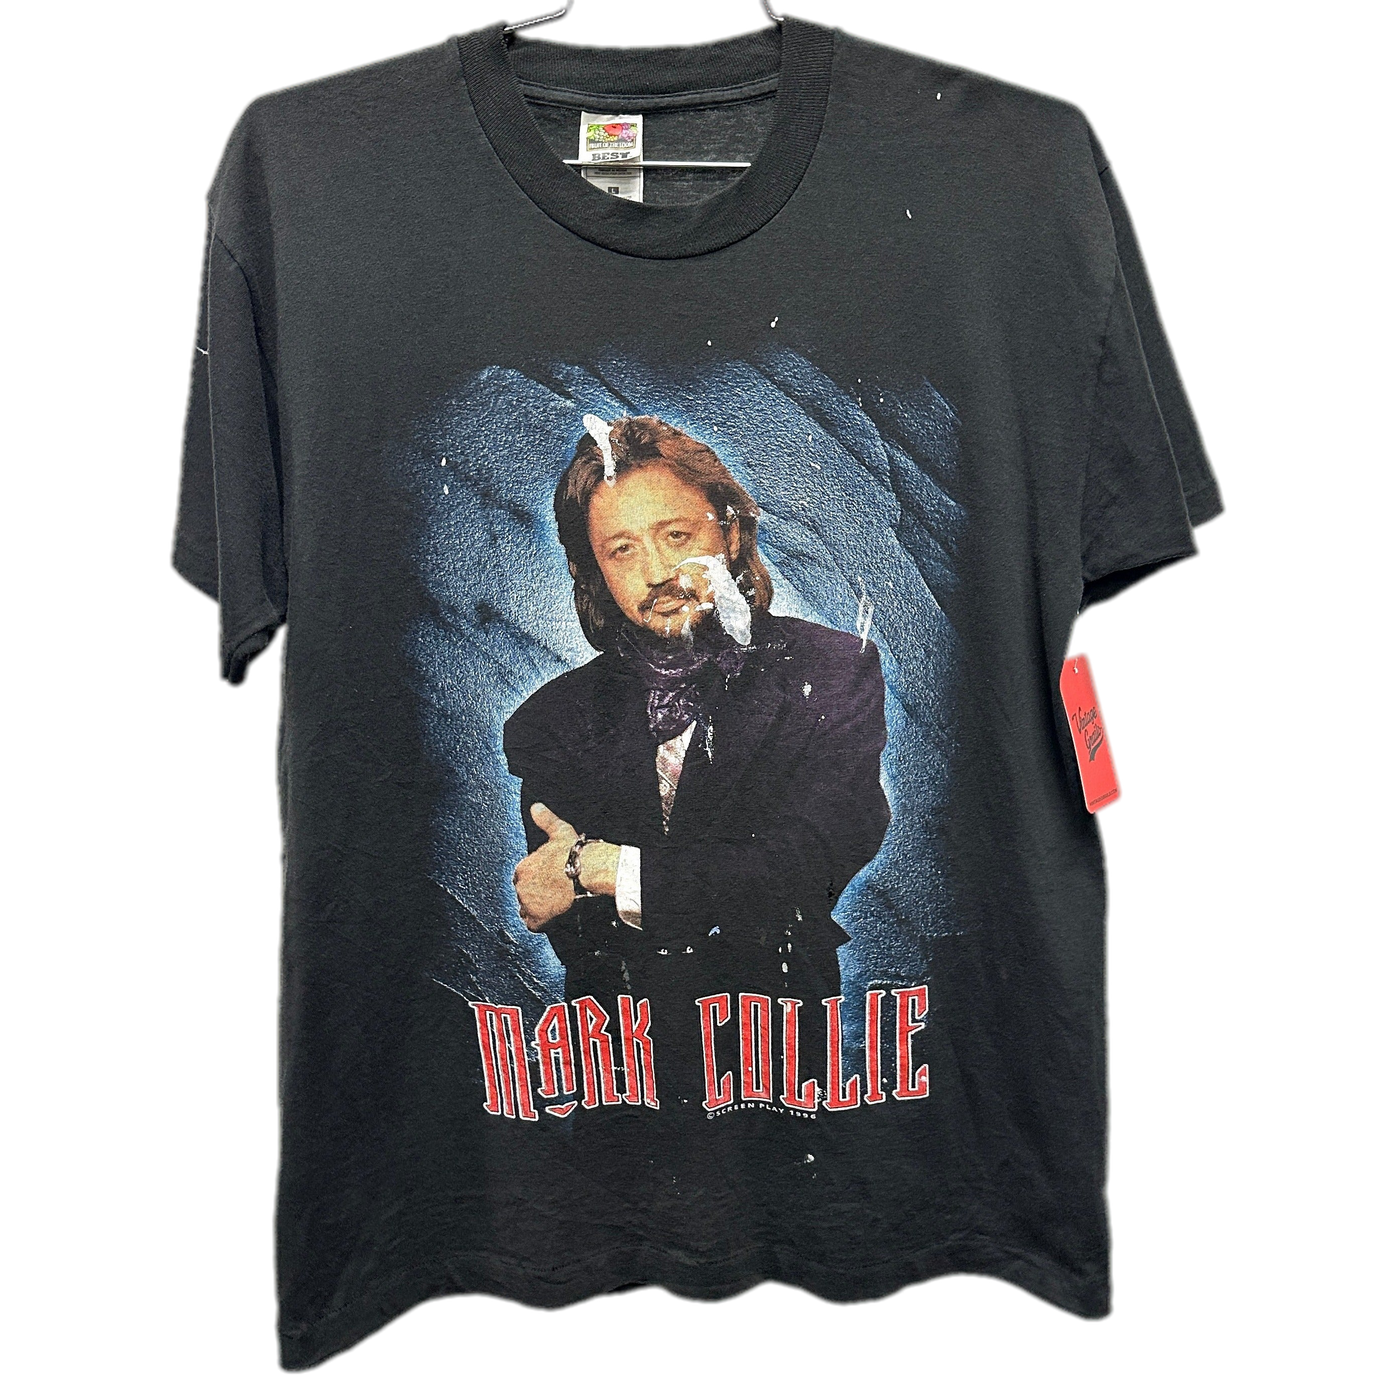 '90 Mark Collie Black Music T-Shirt sz L